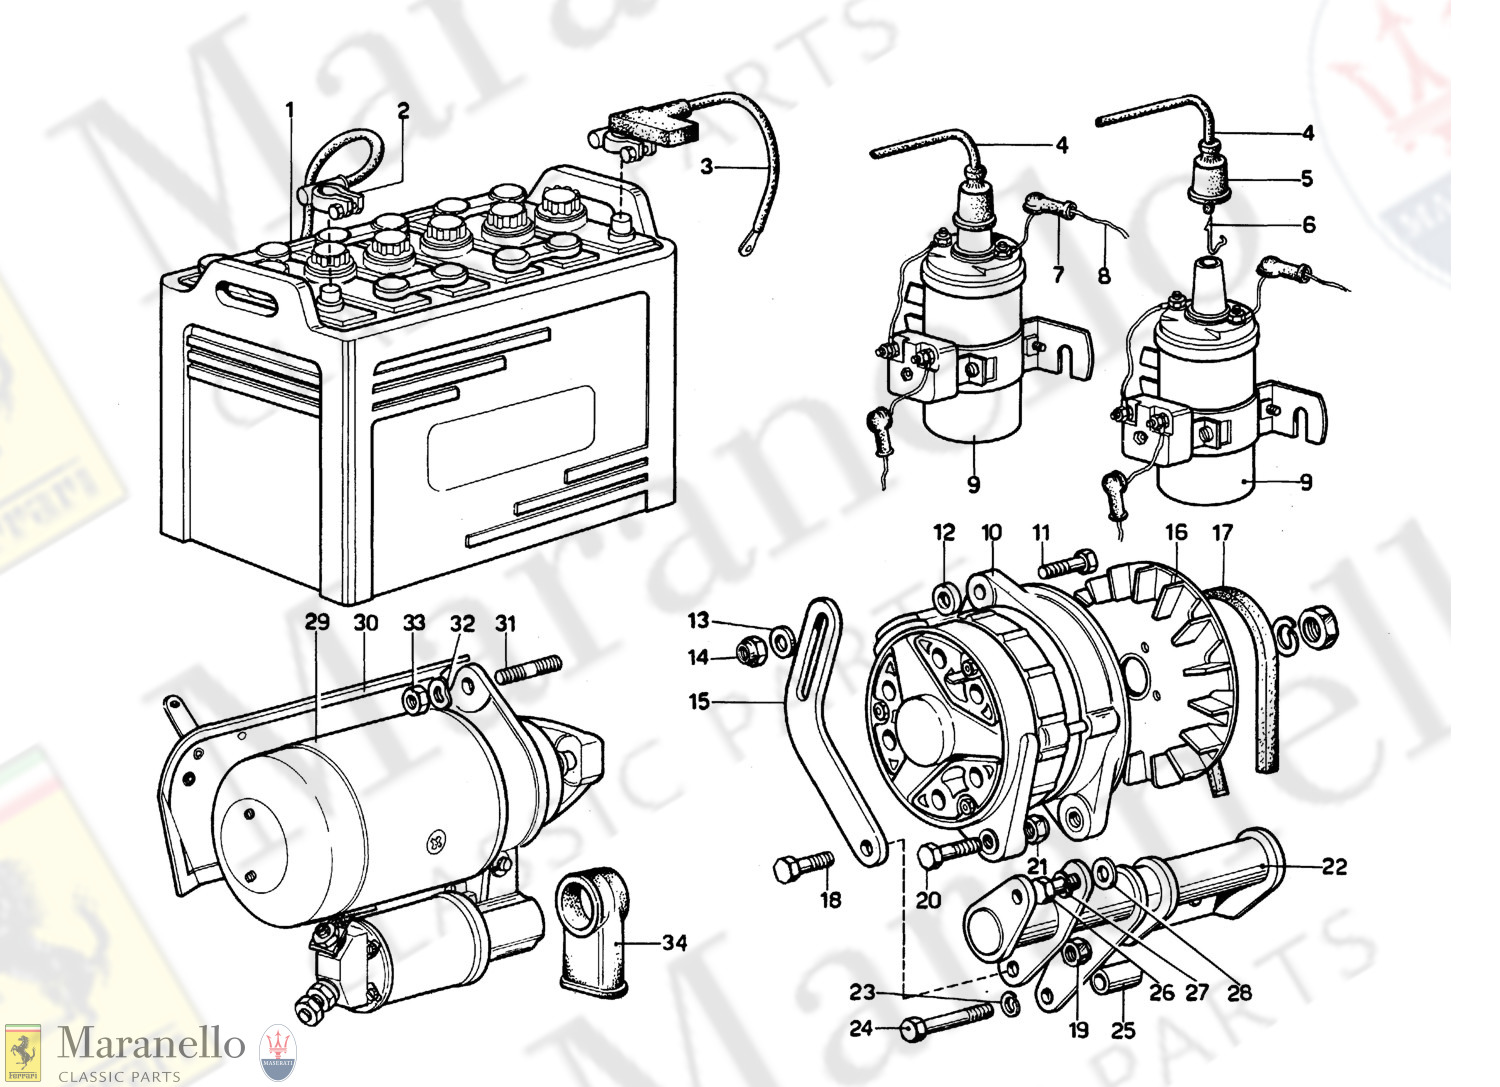 017 - Generator Accumulator Coils & Starter